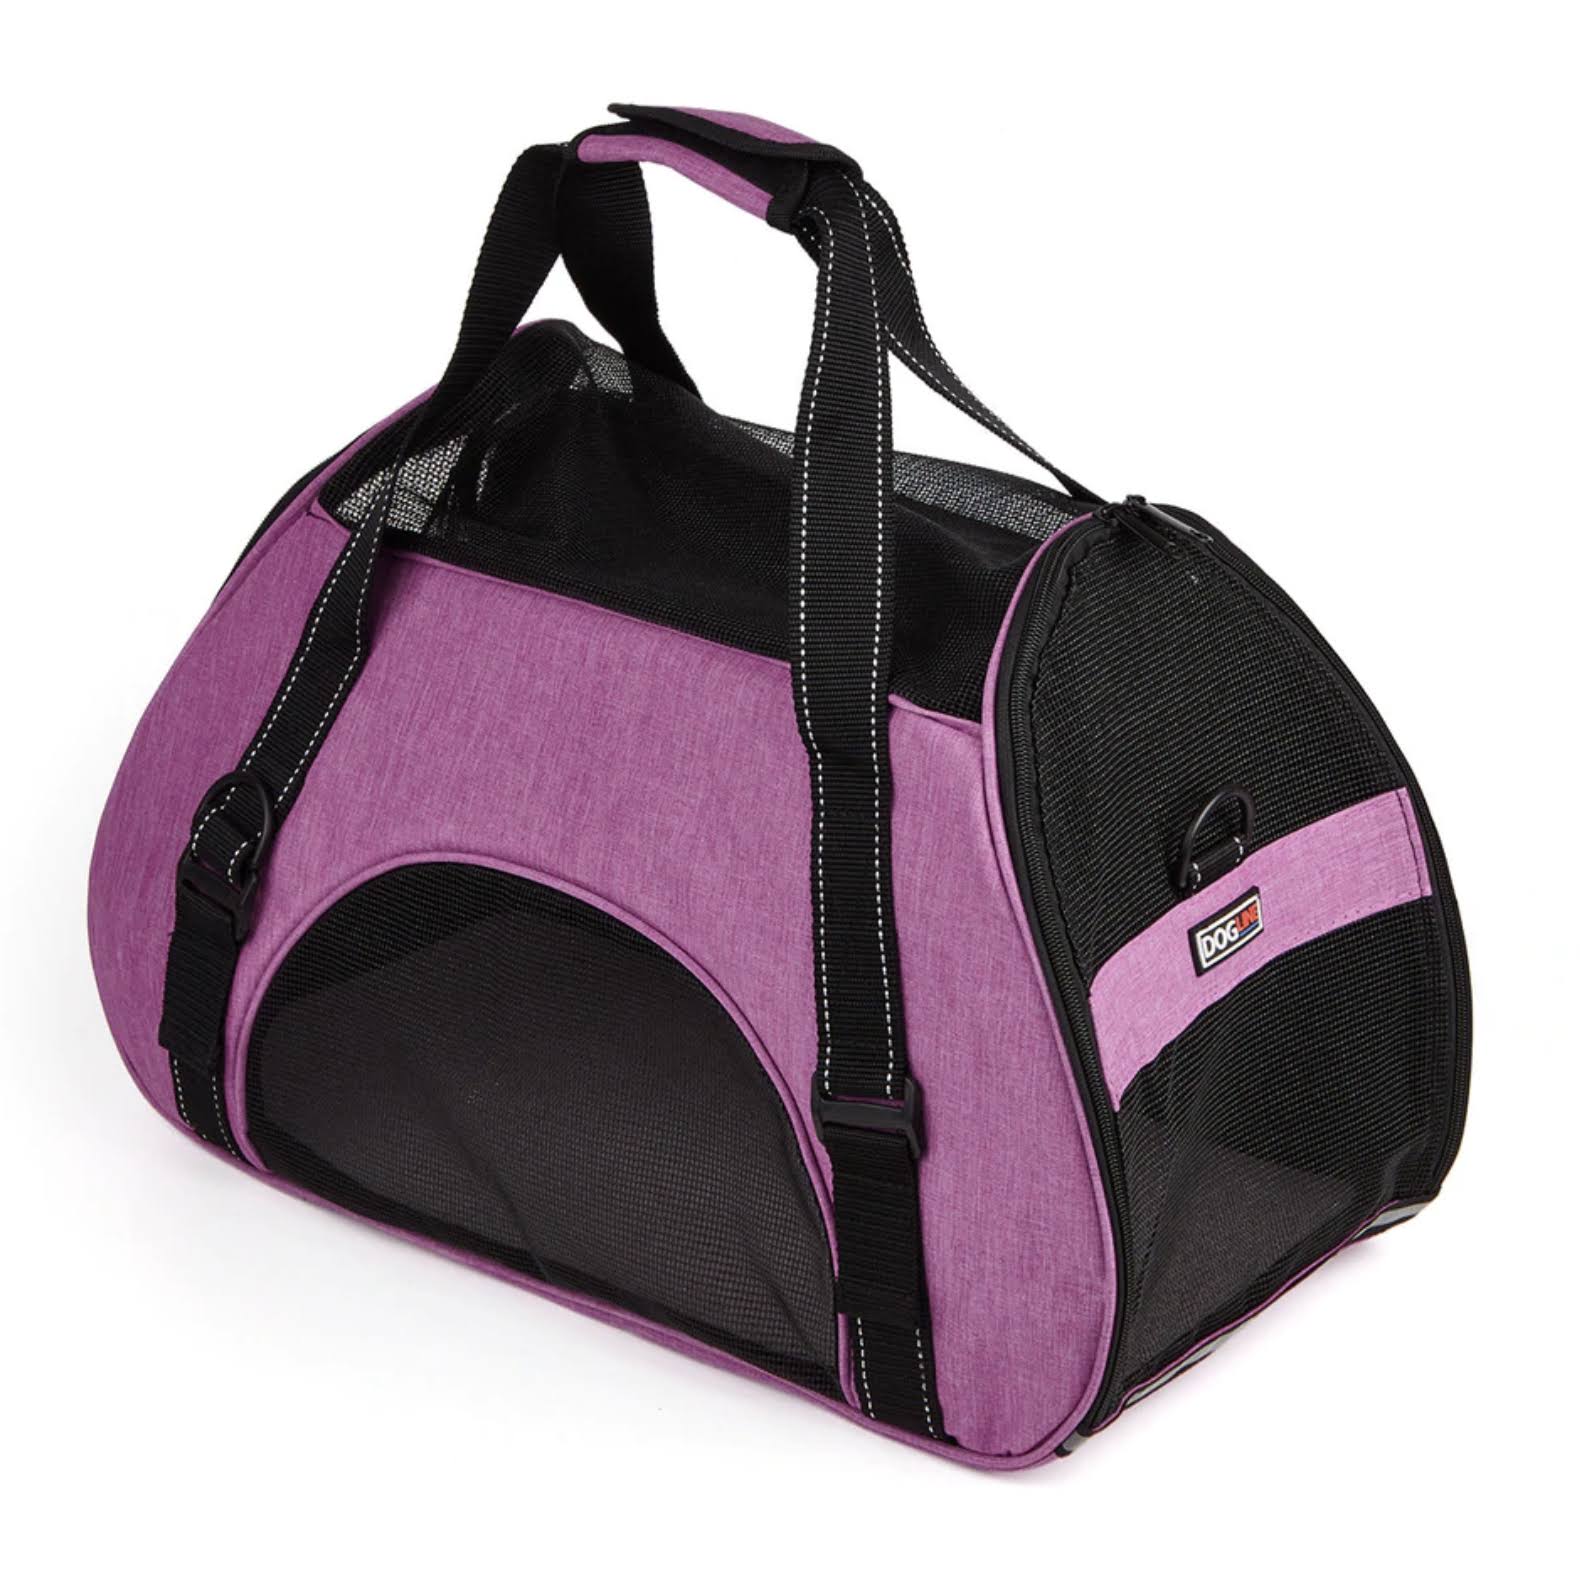 Dogline N0292-7 Dog Carrier Bag H 12" X W 8" X L 17" - Pink, Small